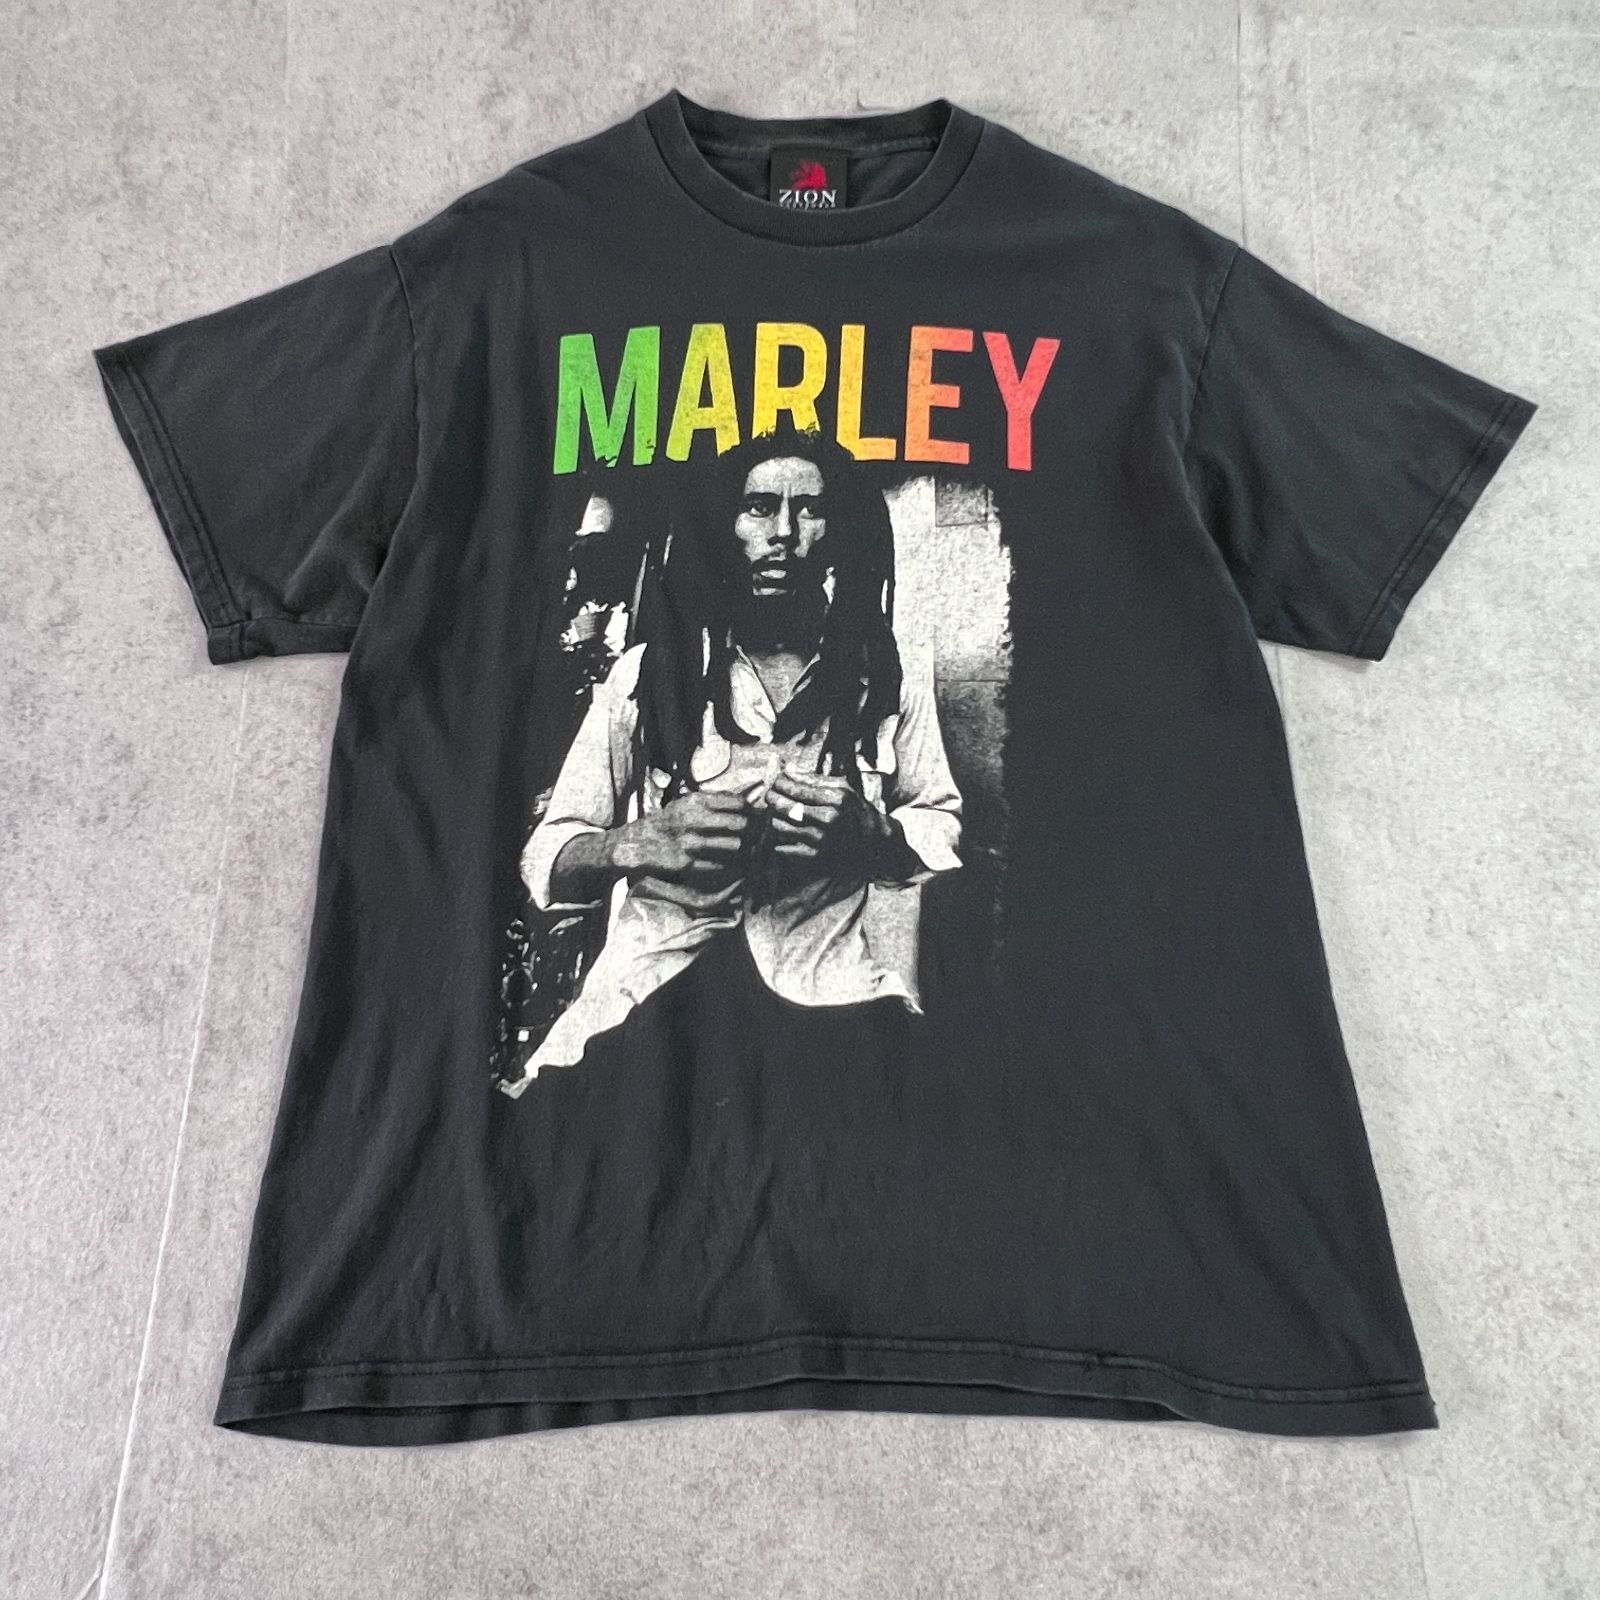 Bob Marley ボブマーリー Zion レゲエ トップス 半袖Tシャツ 古着 ブラック 黒 L